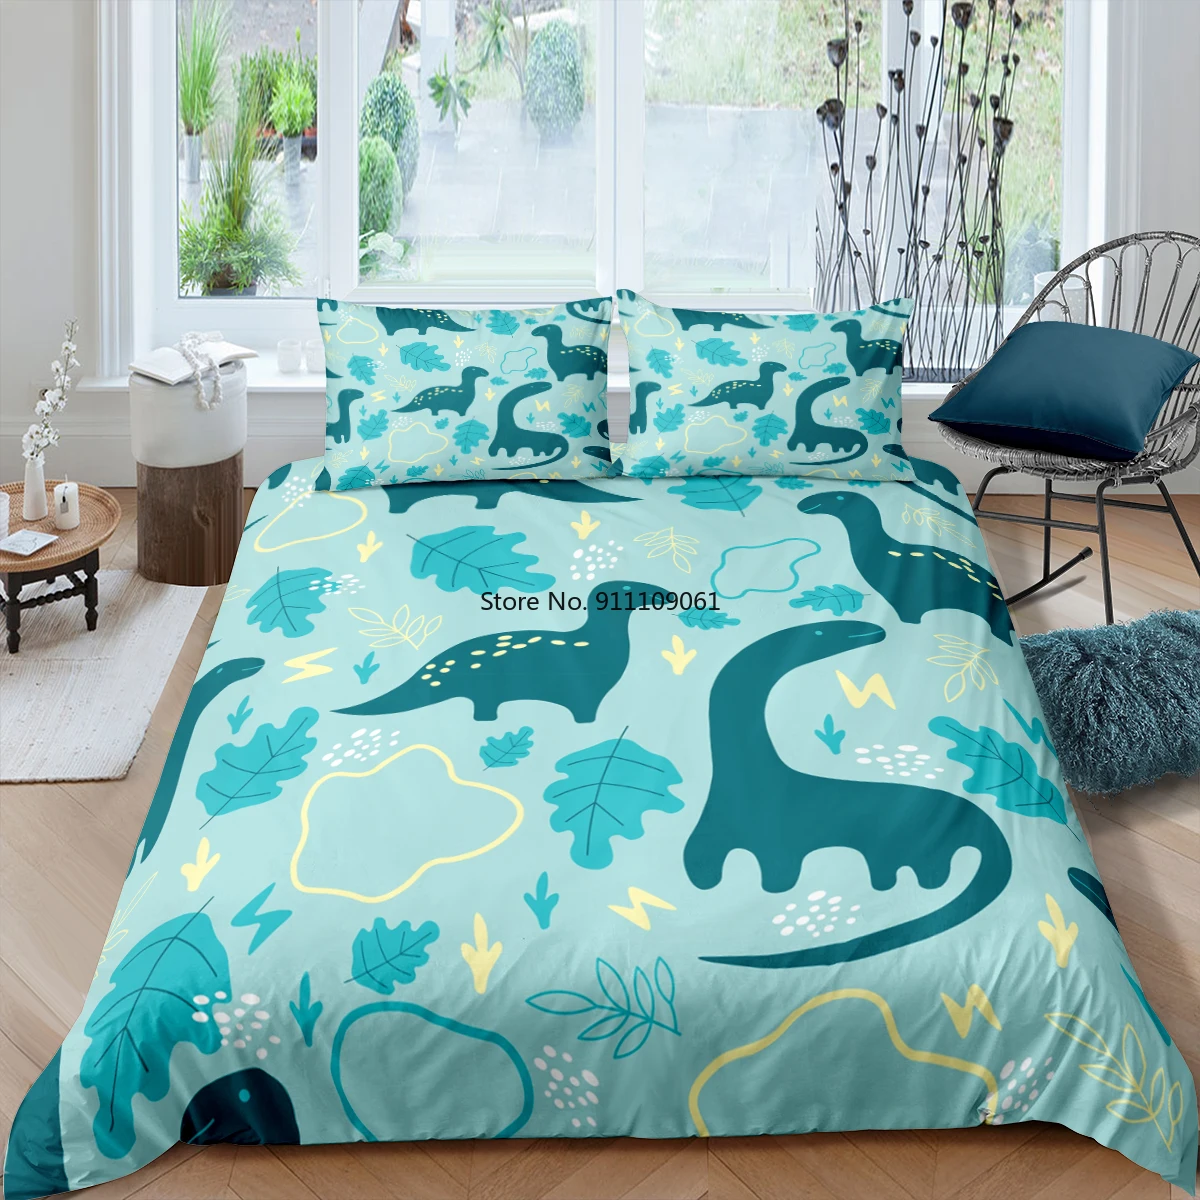 

Cartoon Dinosaur Pattern 3d Bedding Sets for Kids 2/3pc Cute Animal Duvet Cover with Pillowcase Children's Bedroom Decoration